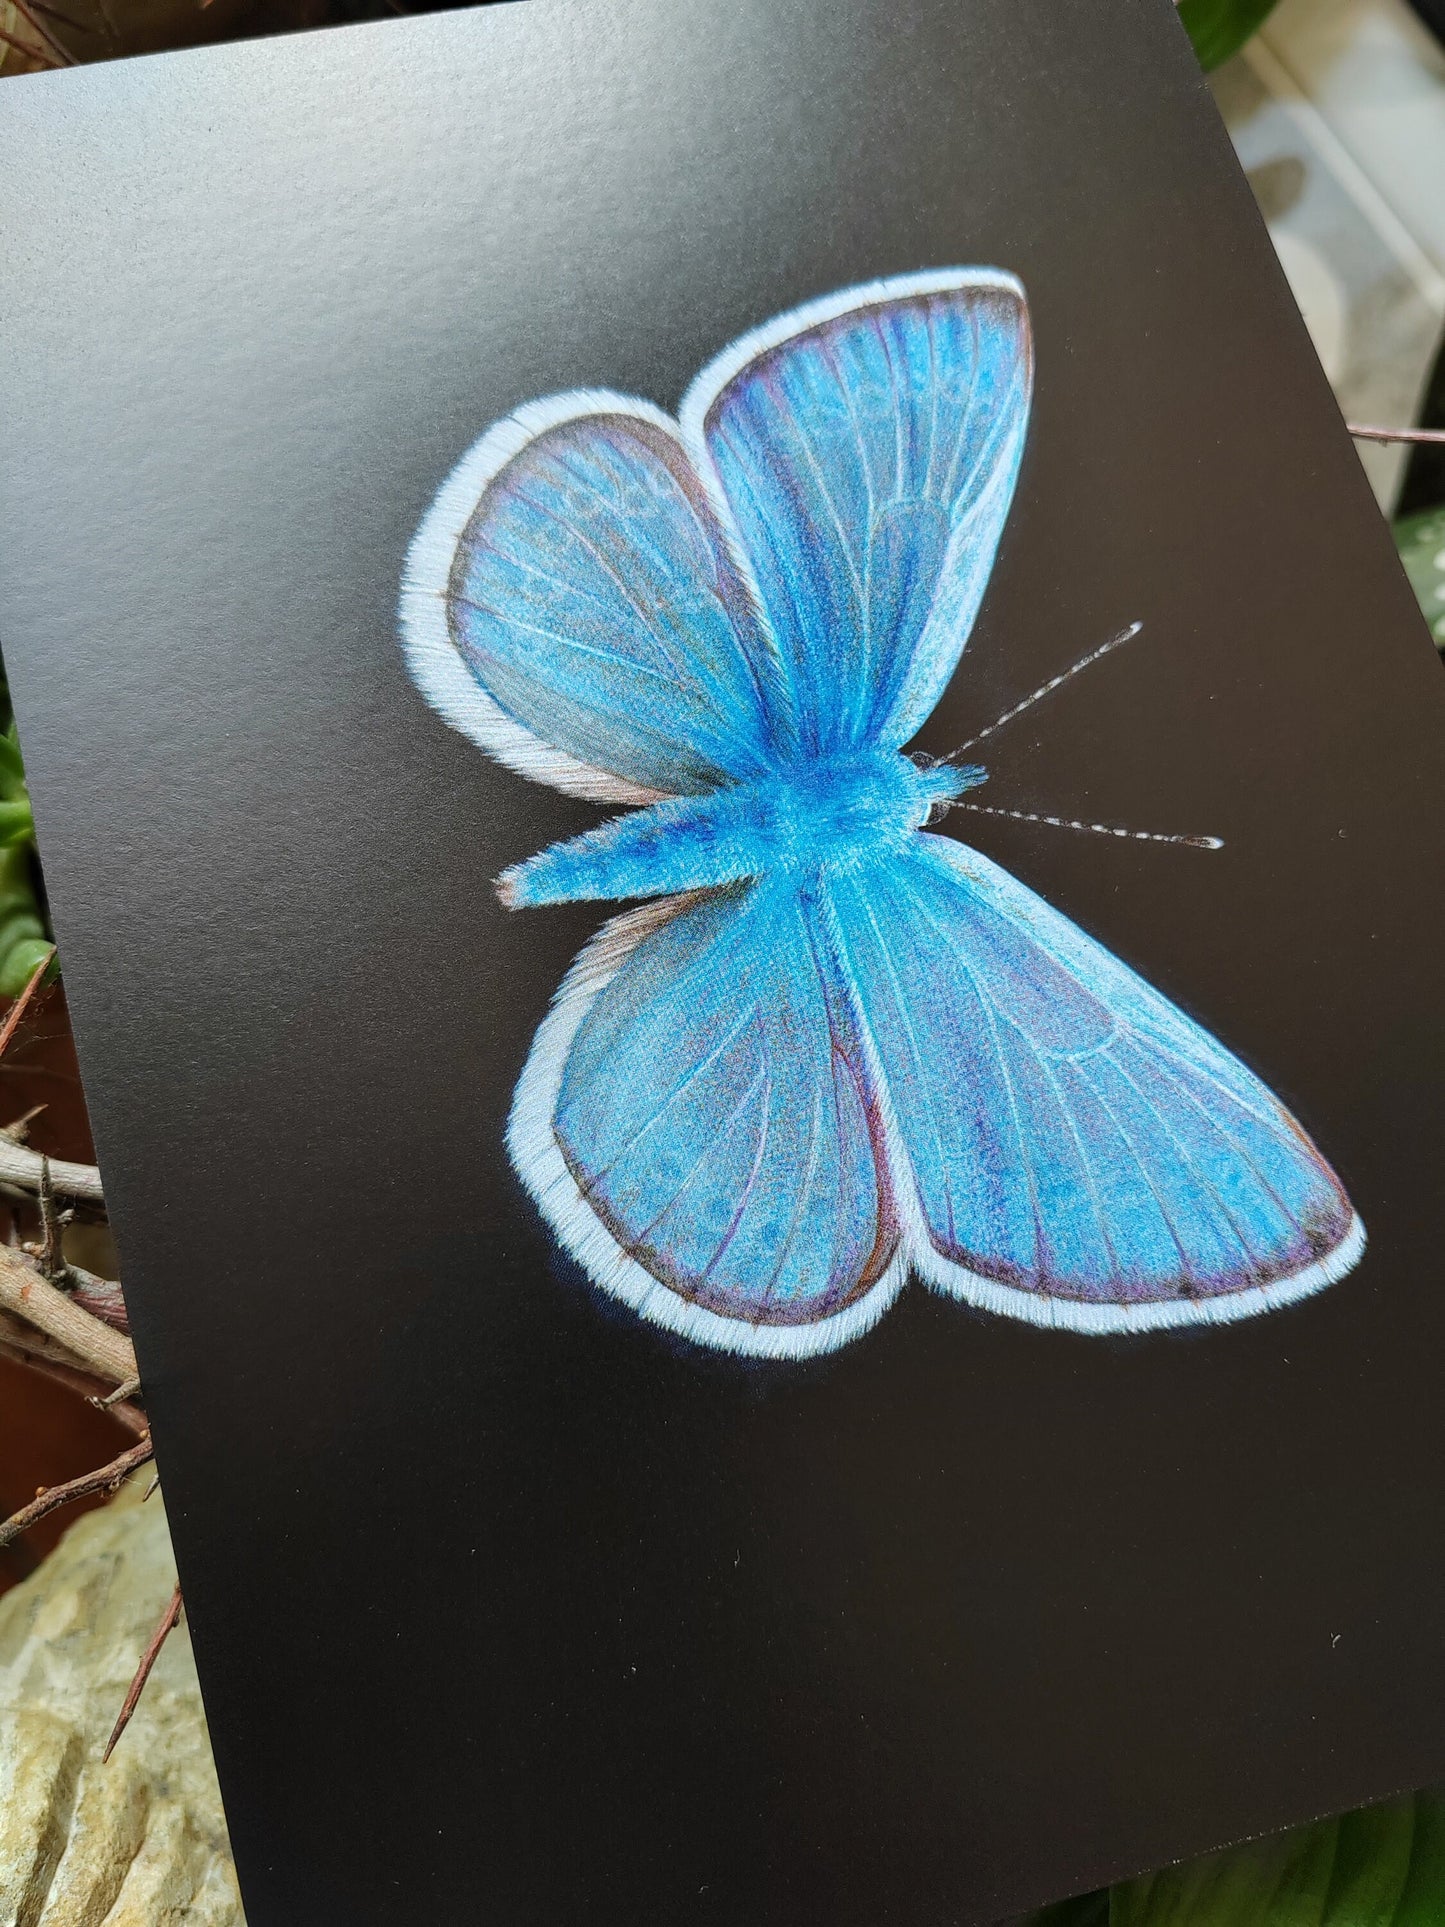 A5 size giant postcard, Glaucopsyche xerces, the extinct Xerces Blue butterfly